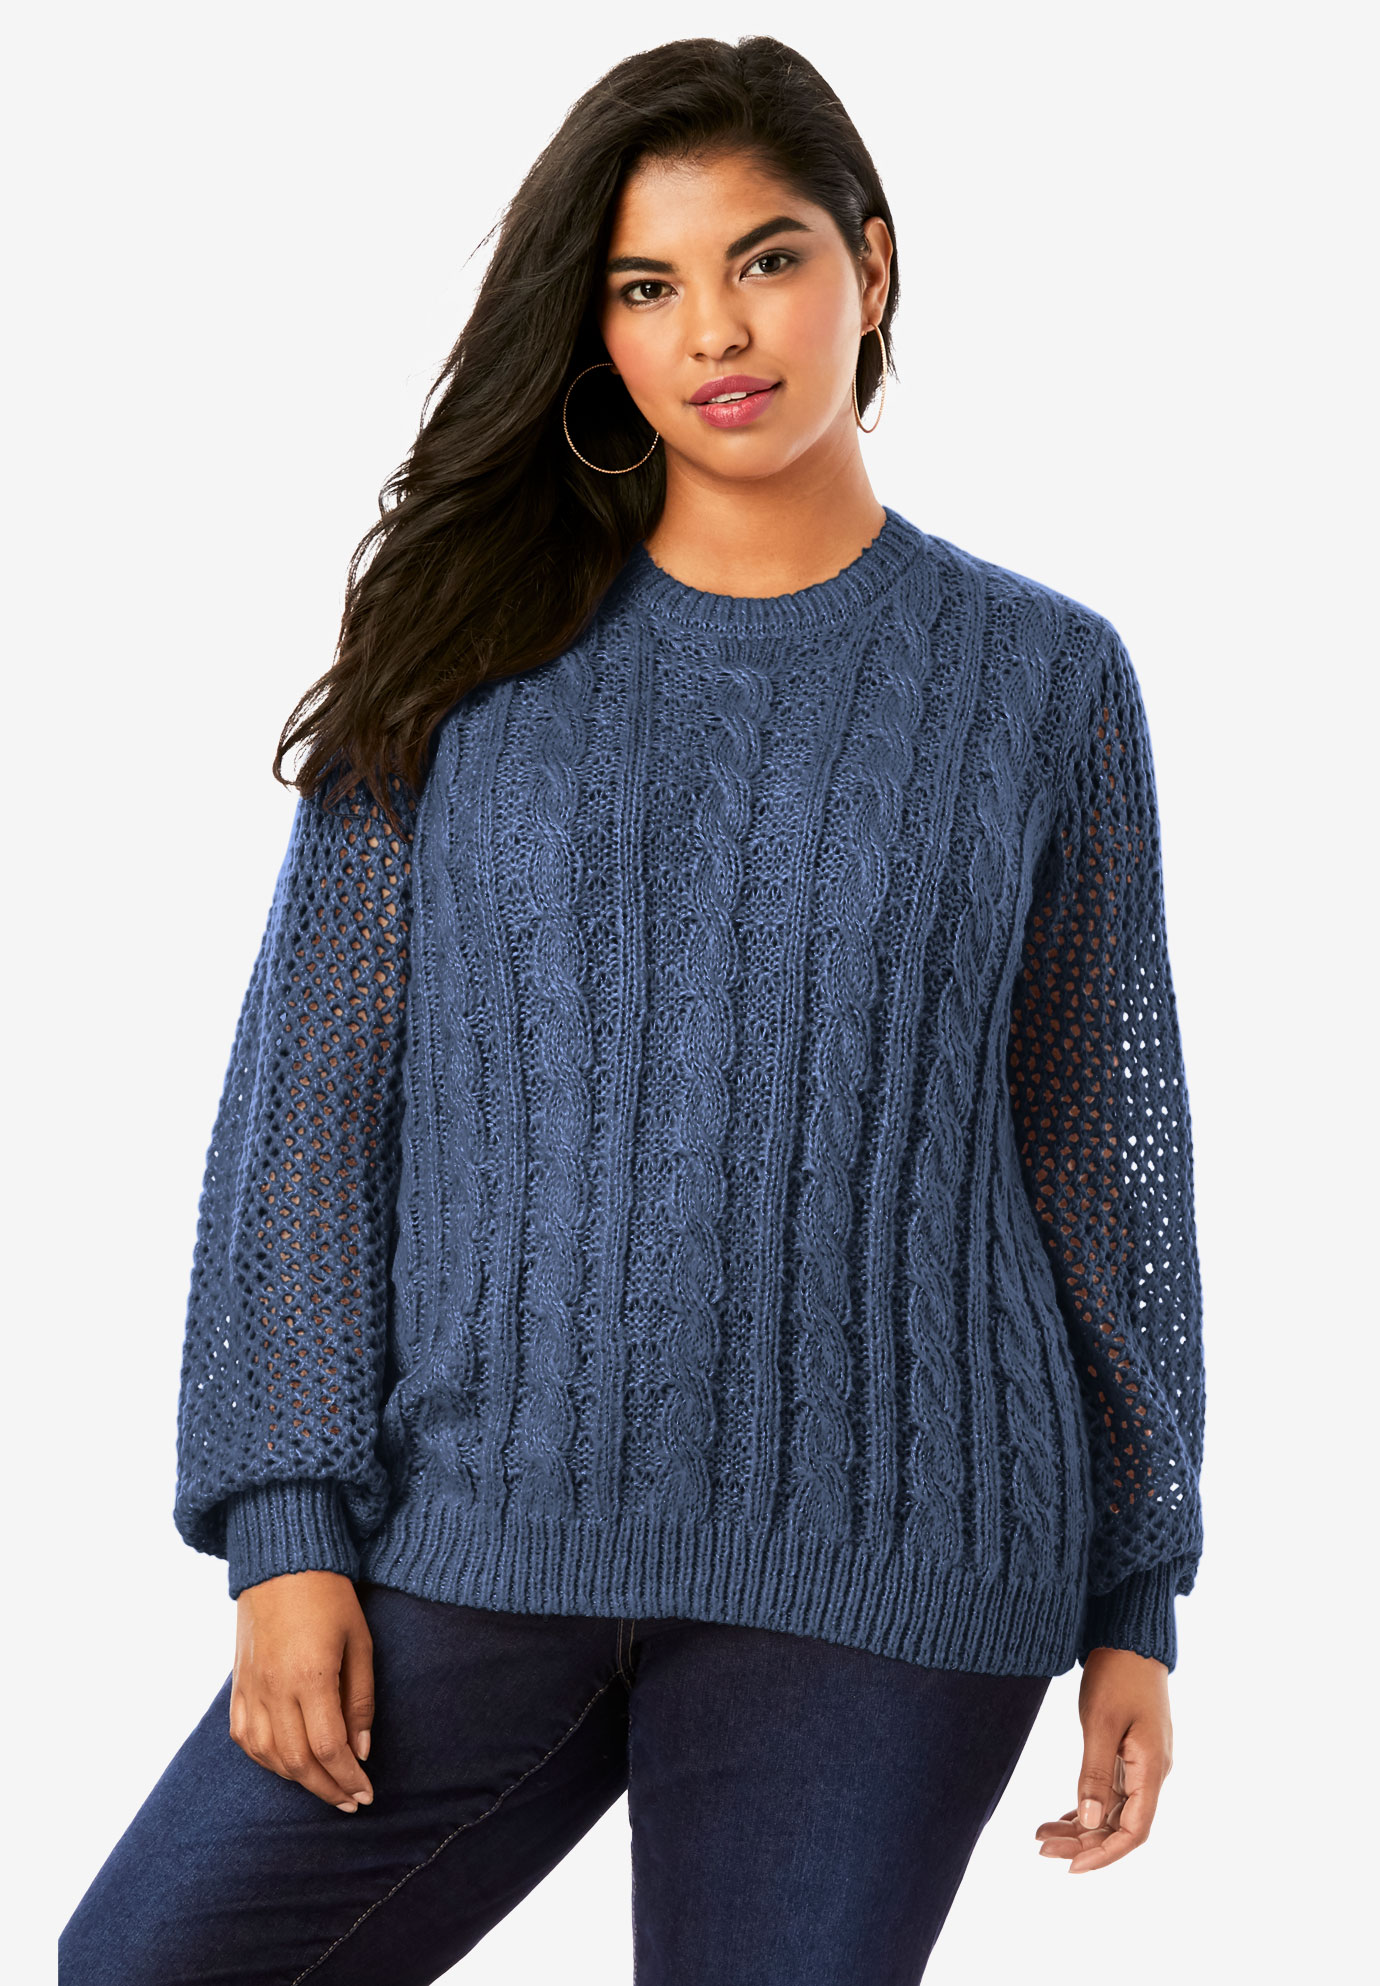 Metallic CableKnit Sweater Plus SizeSweaters & Cardigans Fullbeauty